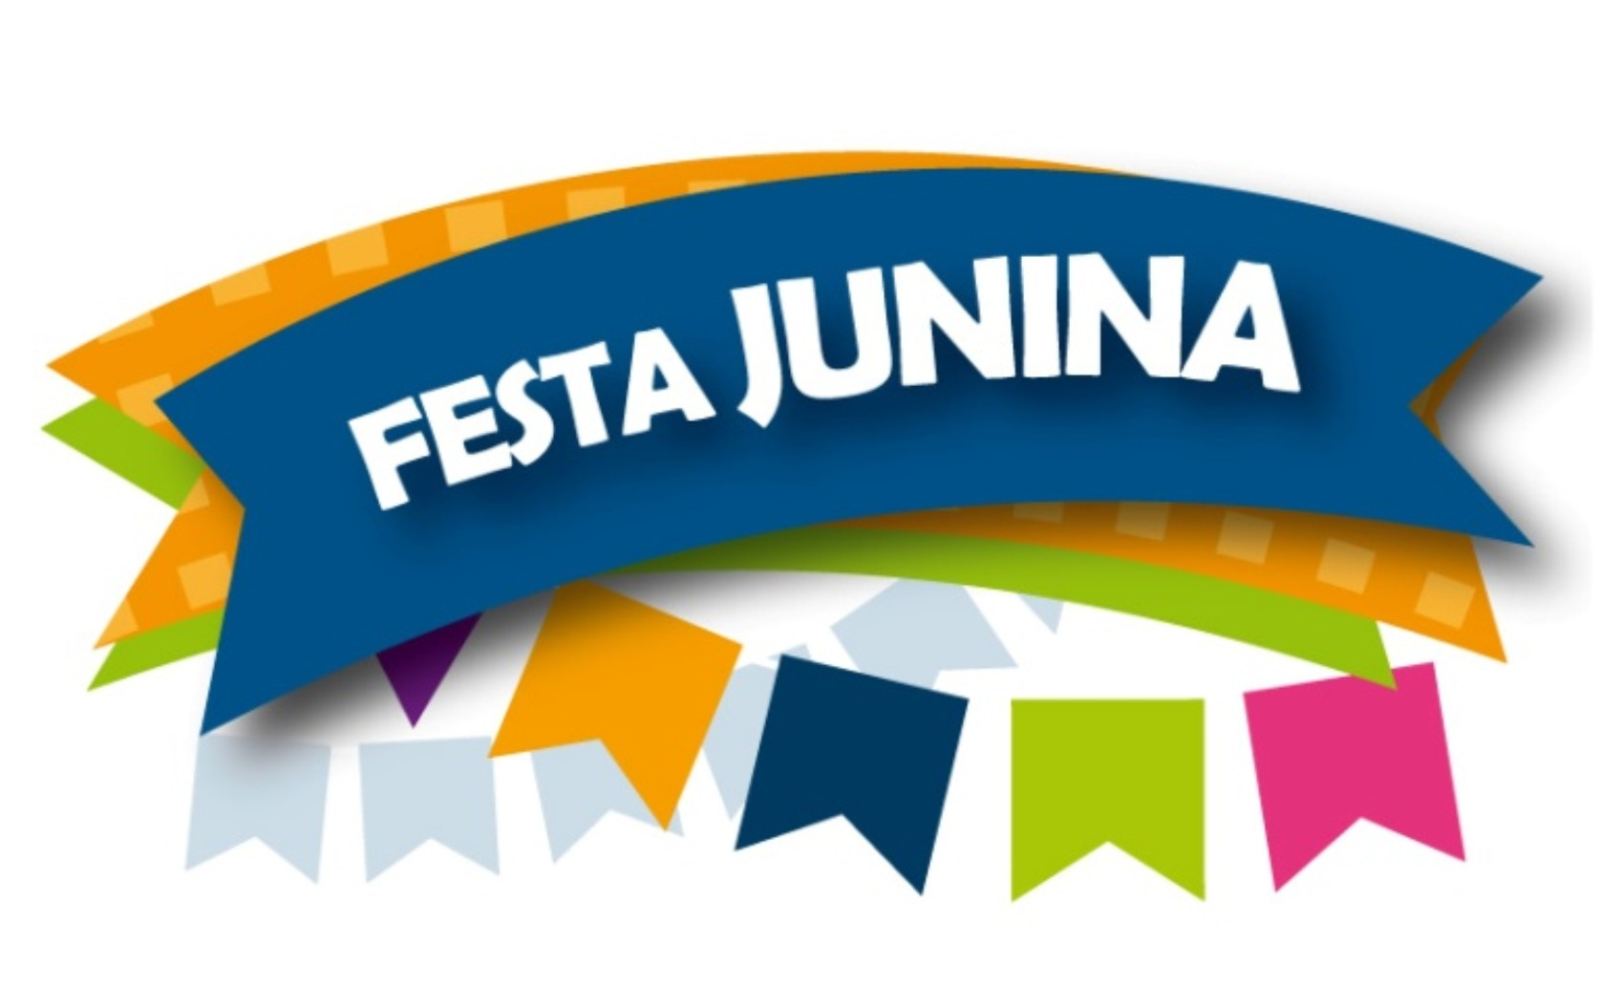 You are currently viewing Festa junina neste sábado